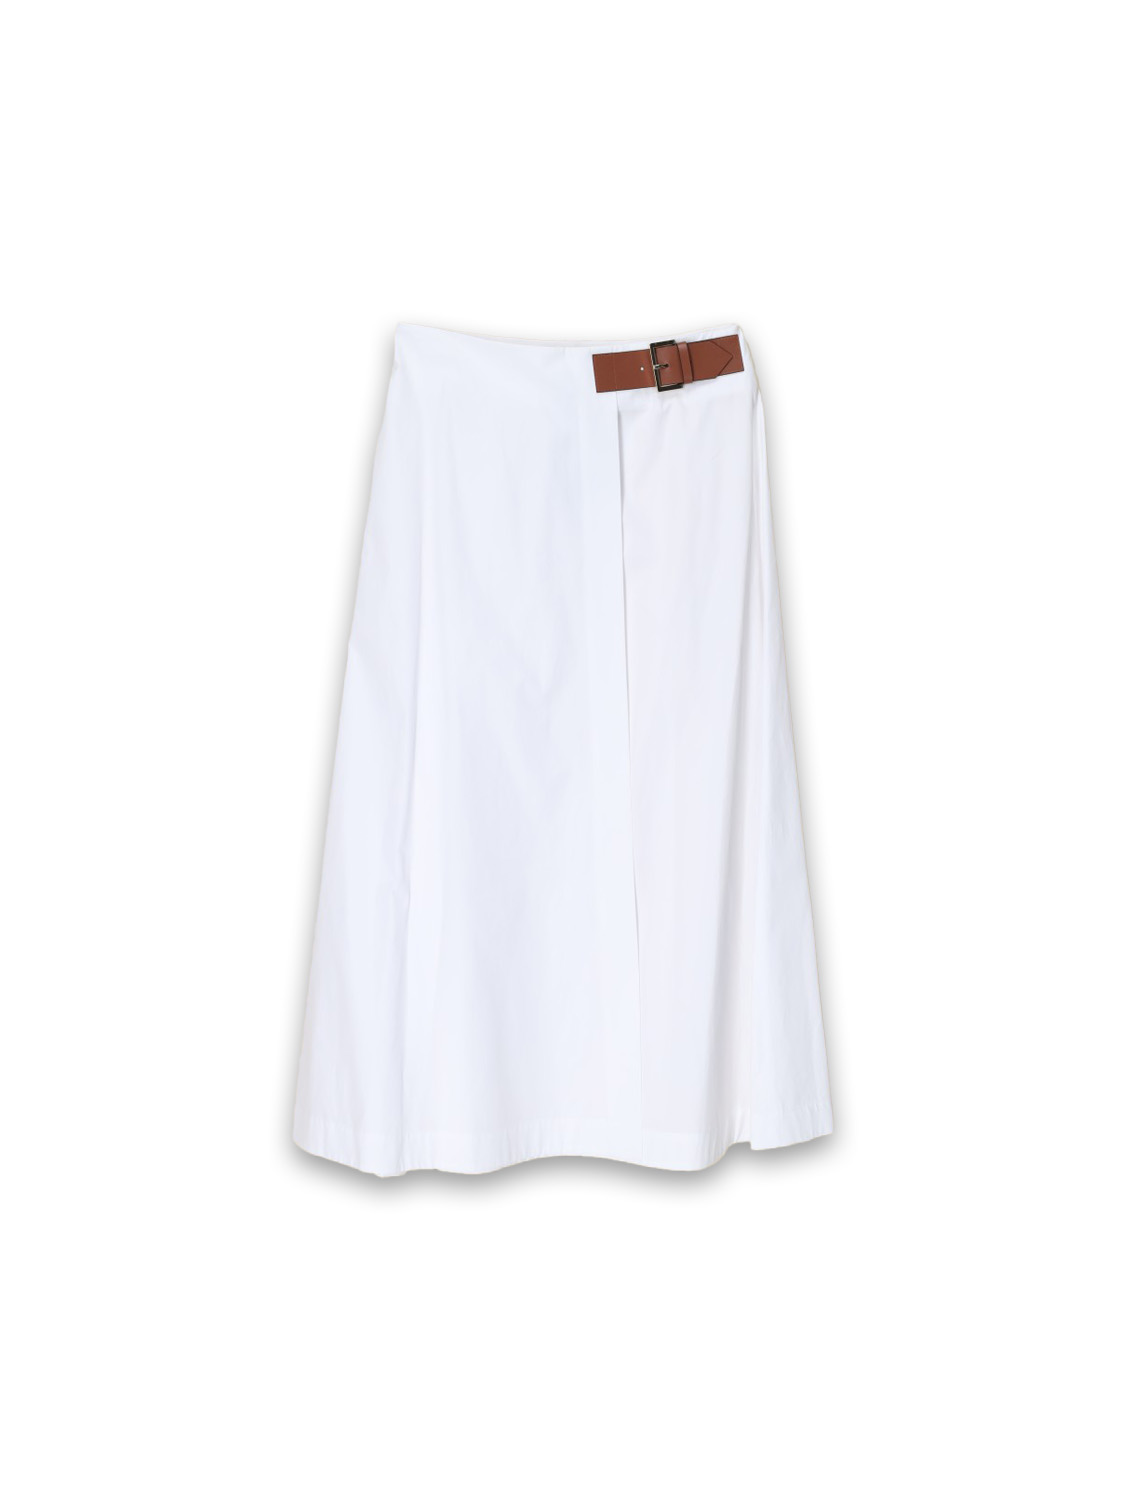 Cotton mini skirt with belt detail 